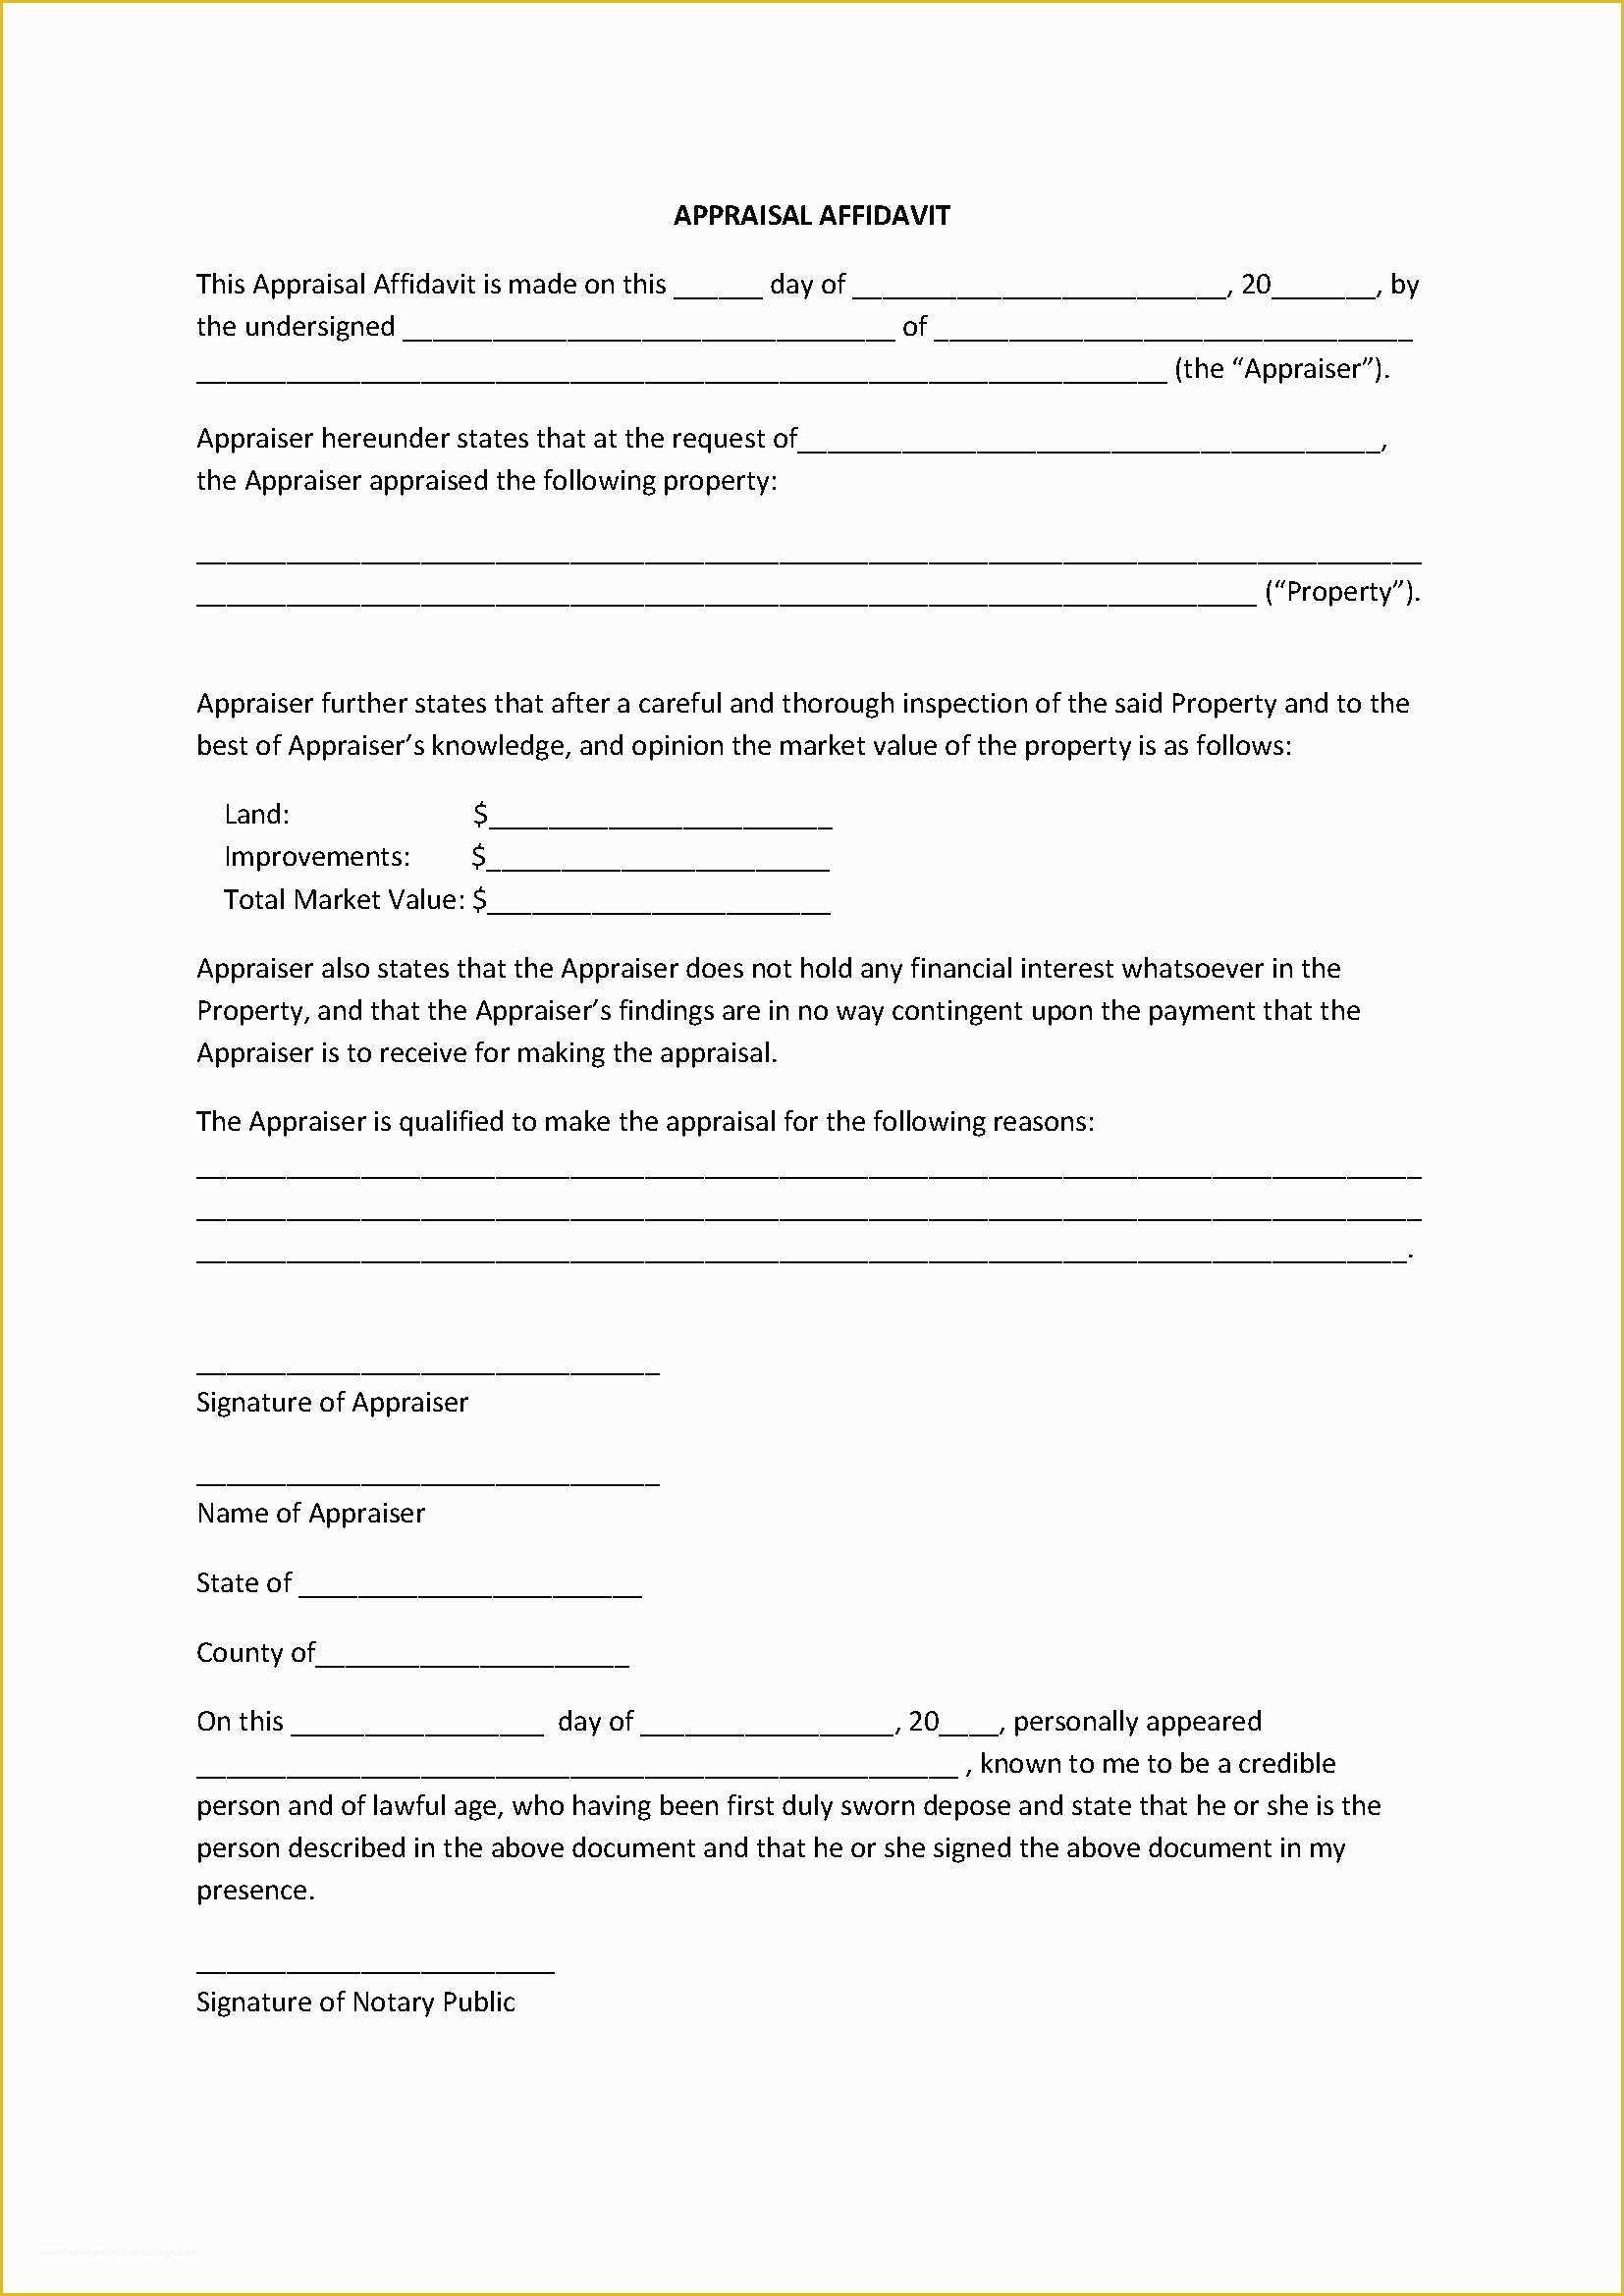 Free General Affidavit Template Of Appealing Appraisal Affidavit form Template Sample